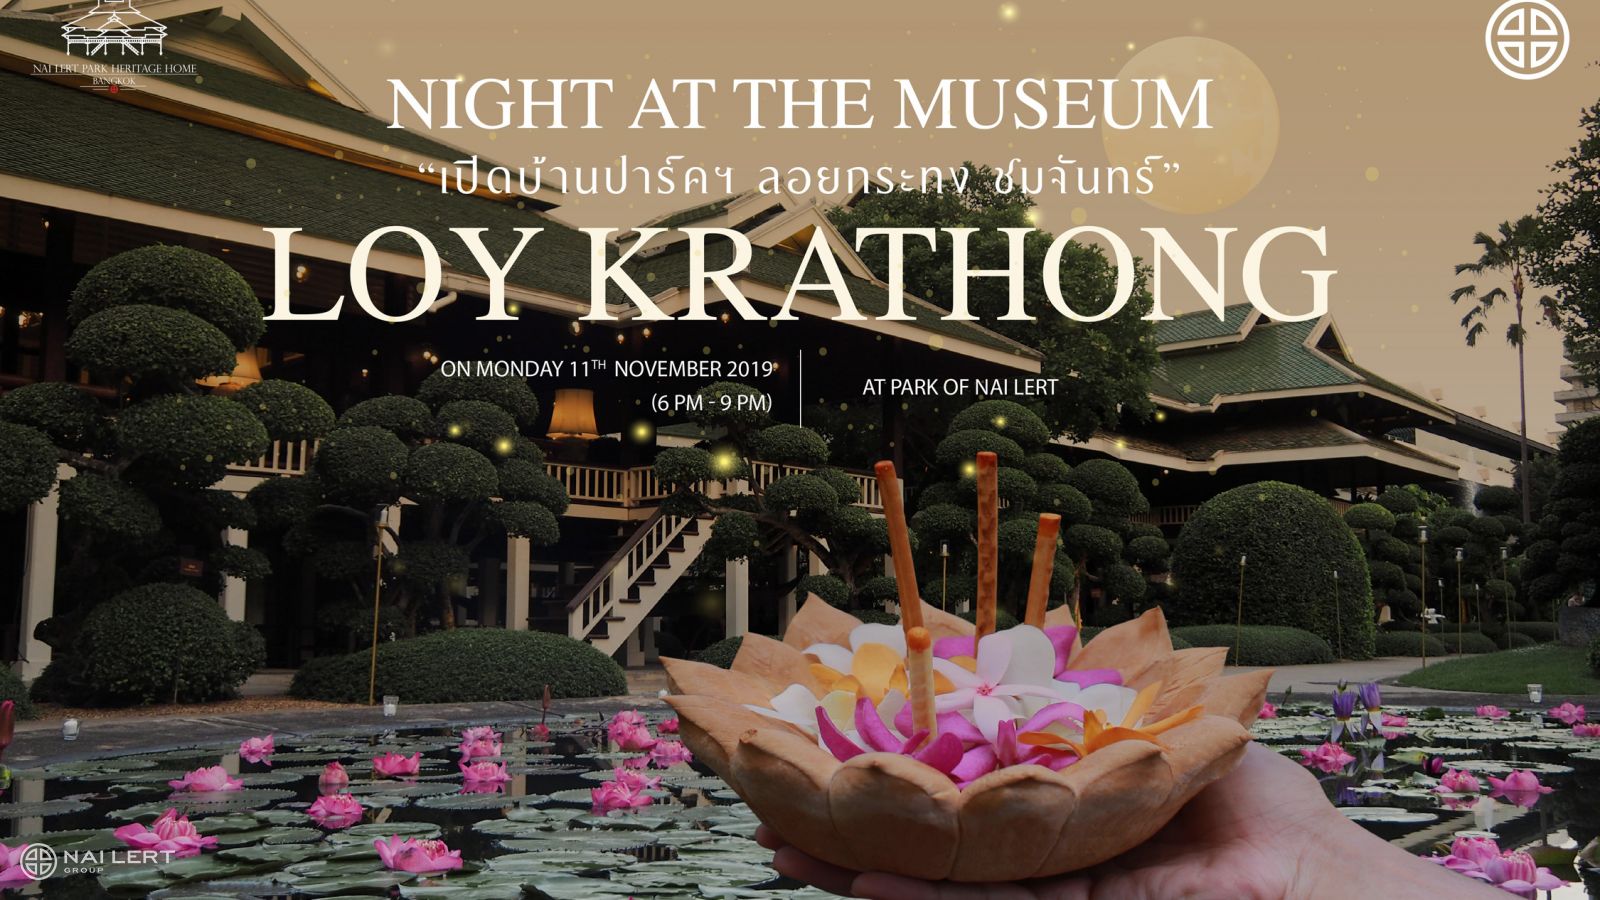 Night at the museum: Loy Krathong